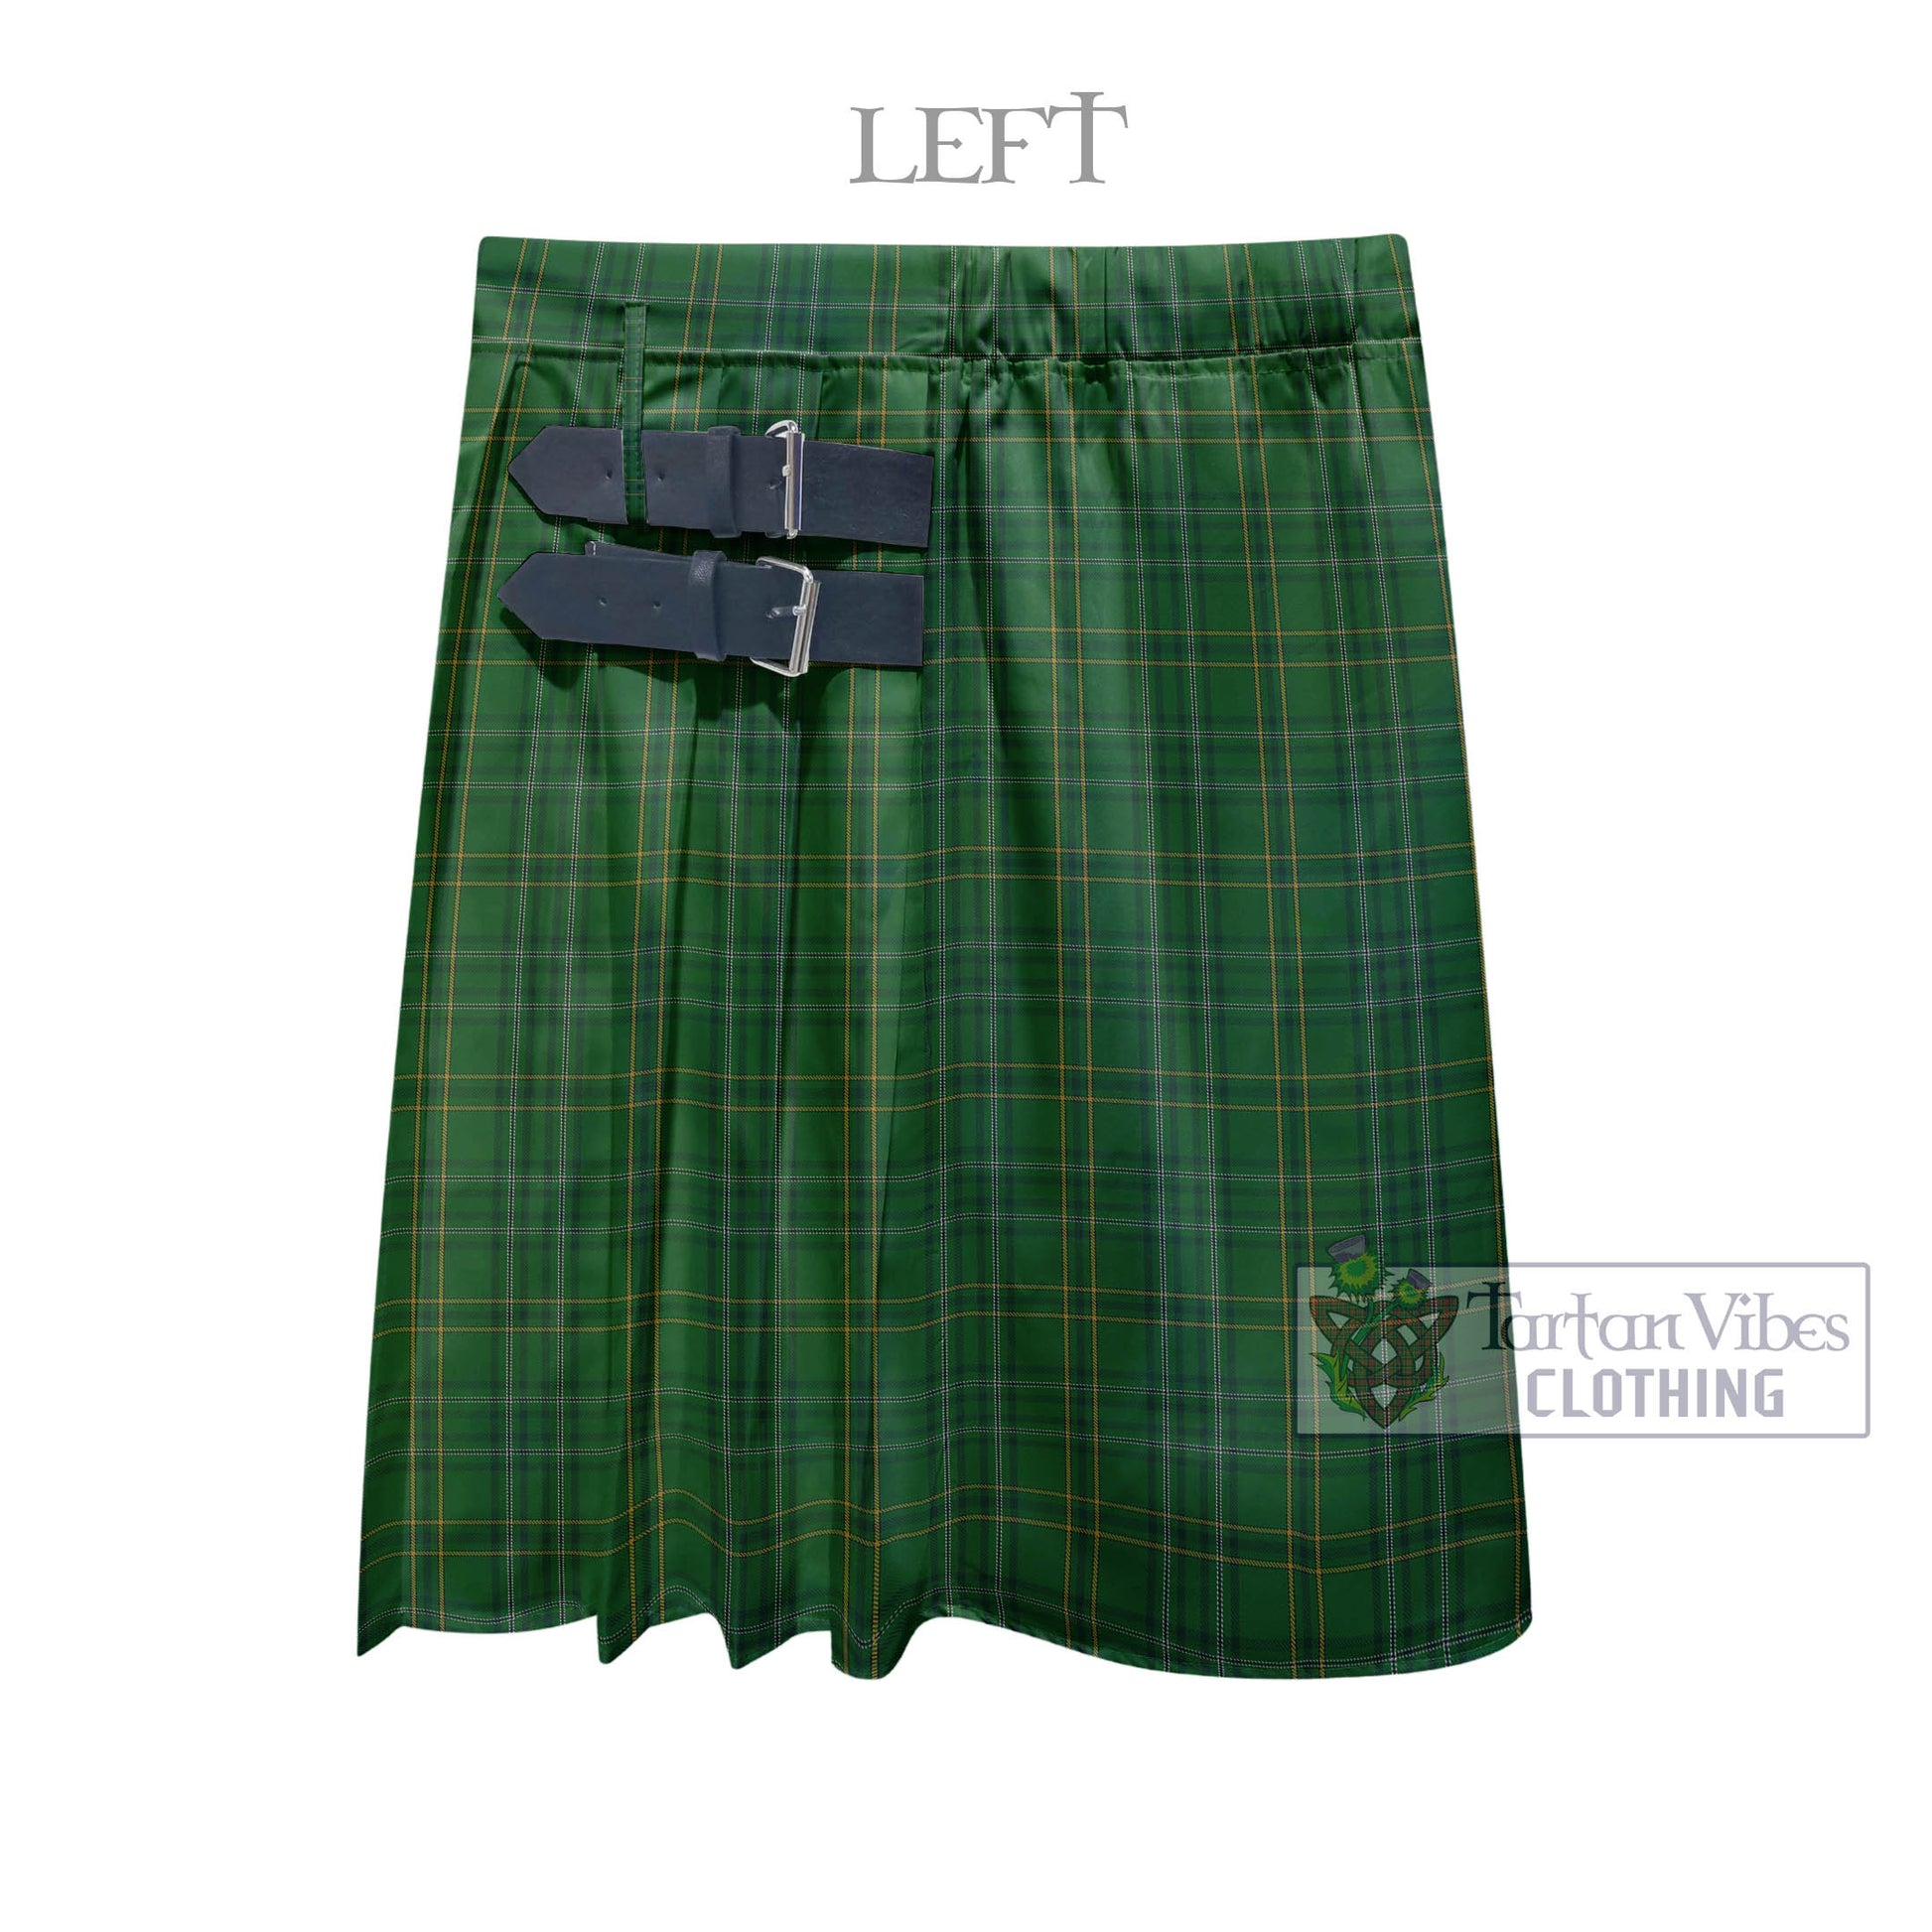 Tartan Vibes Clothing Wexford County Ireland Tartan Men's Pleated Skirt - Fashion Casual Retro Scottish Style